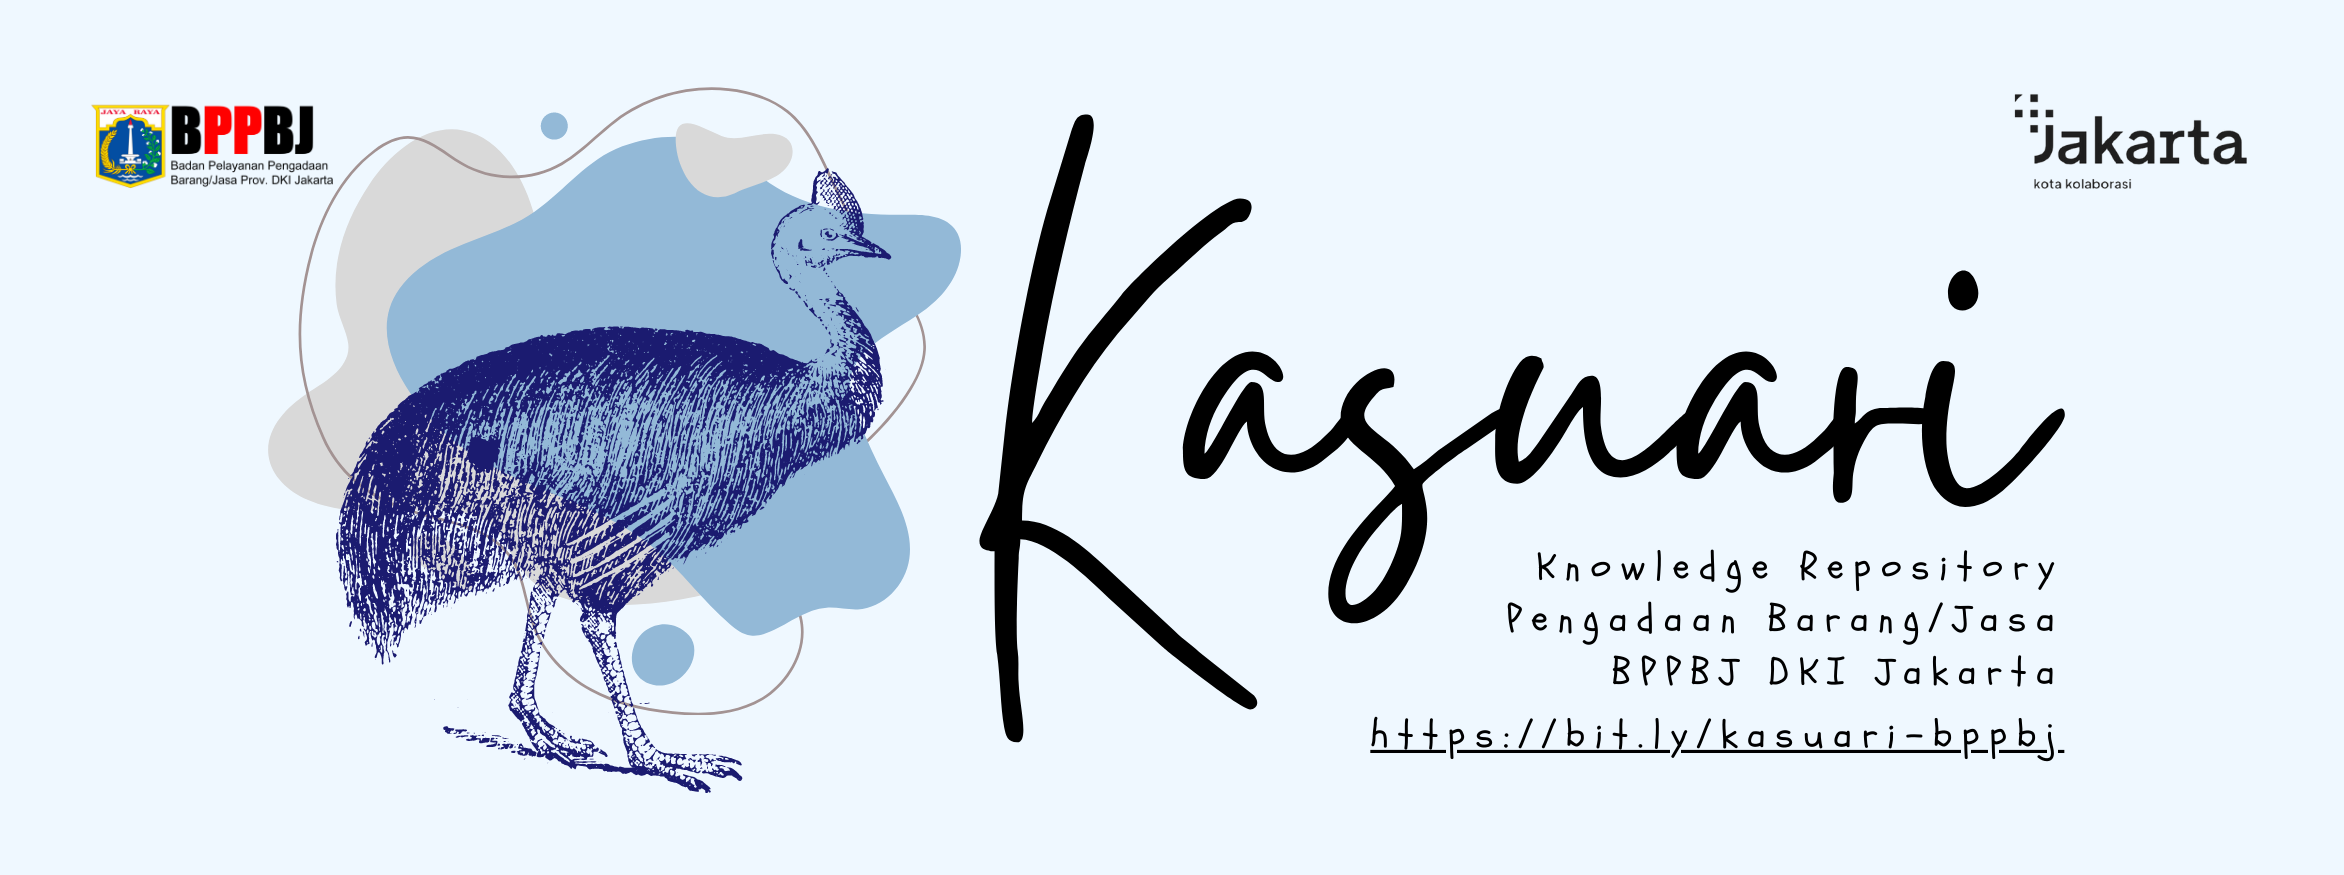 KASUARI (Knowledge Repository Pengadaan Barang/Jasa BPPBJ DKI Jakarta)